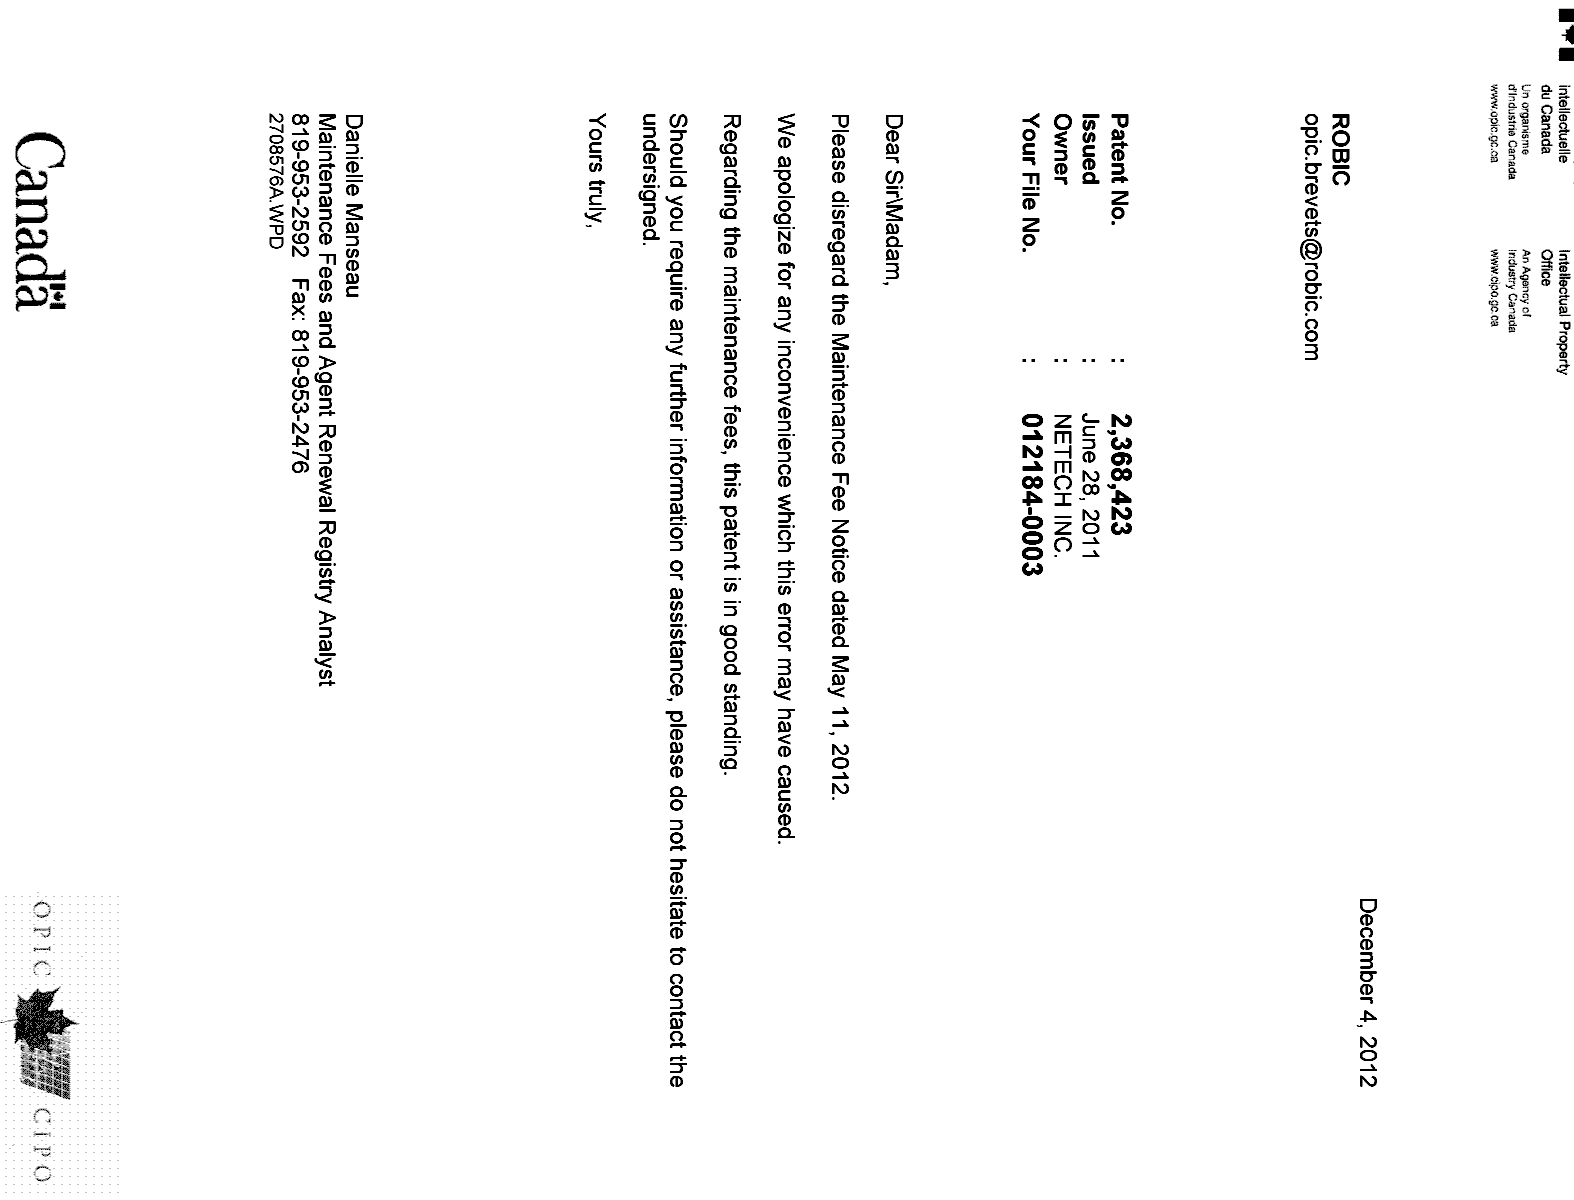 Canadian Patent Document 2368423. Correspondence 20121204. Image 1 of 1